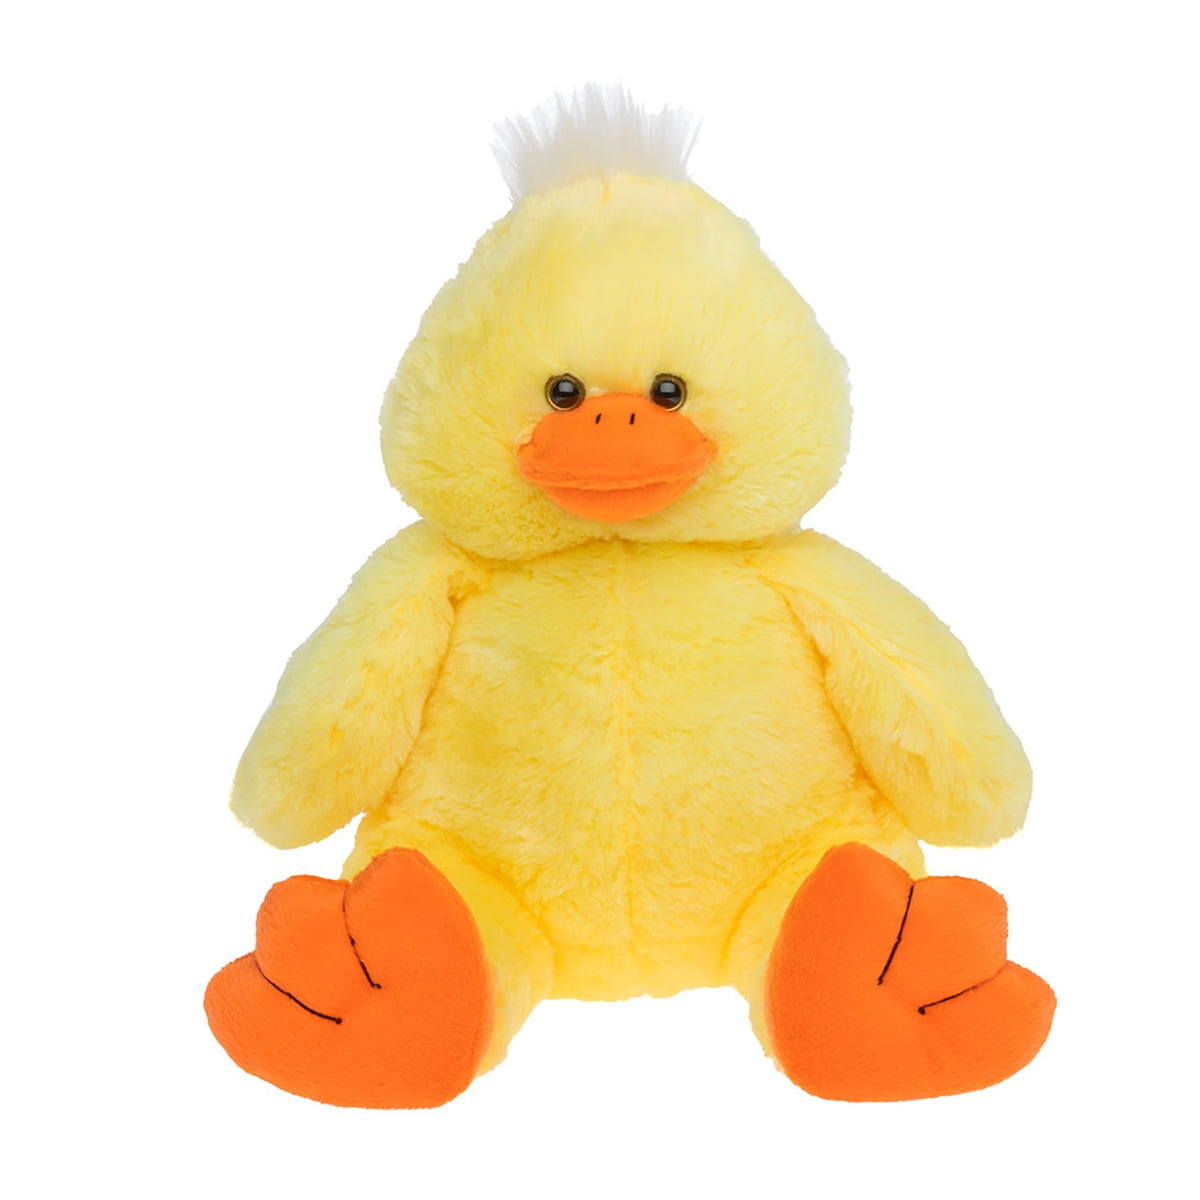 Cuddly Soft 16 inch Stuffed Yellow Duck...We stuff 'em...you love 'em! Animala 